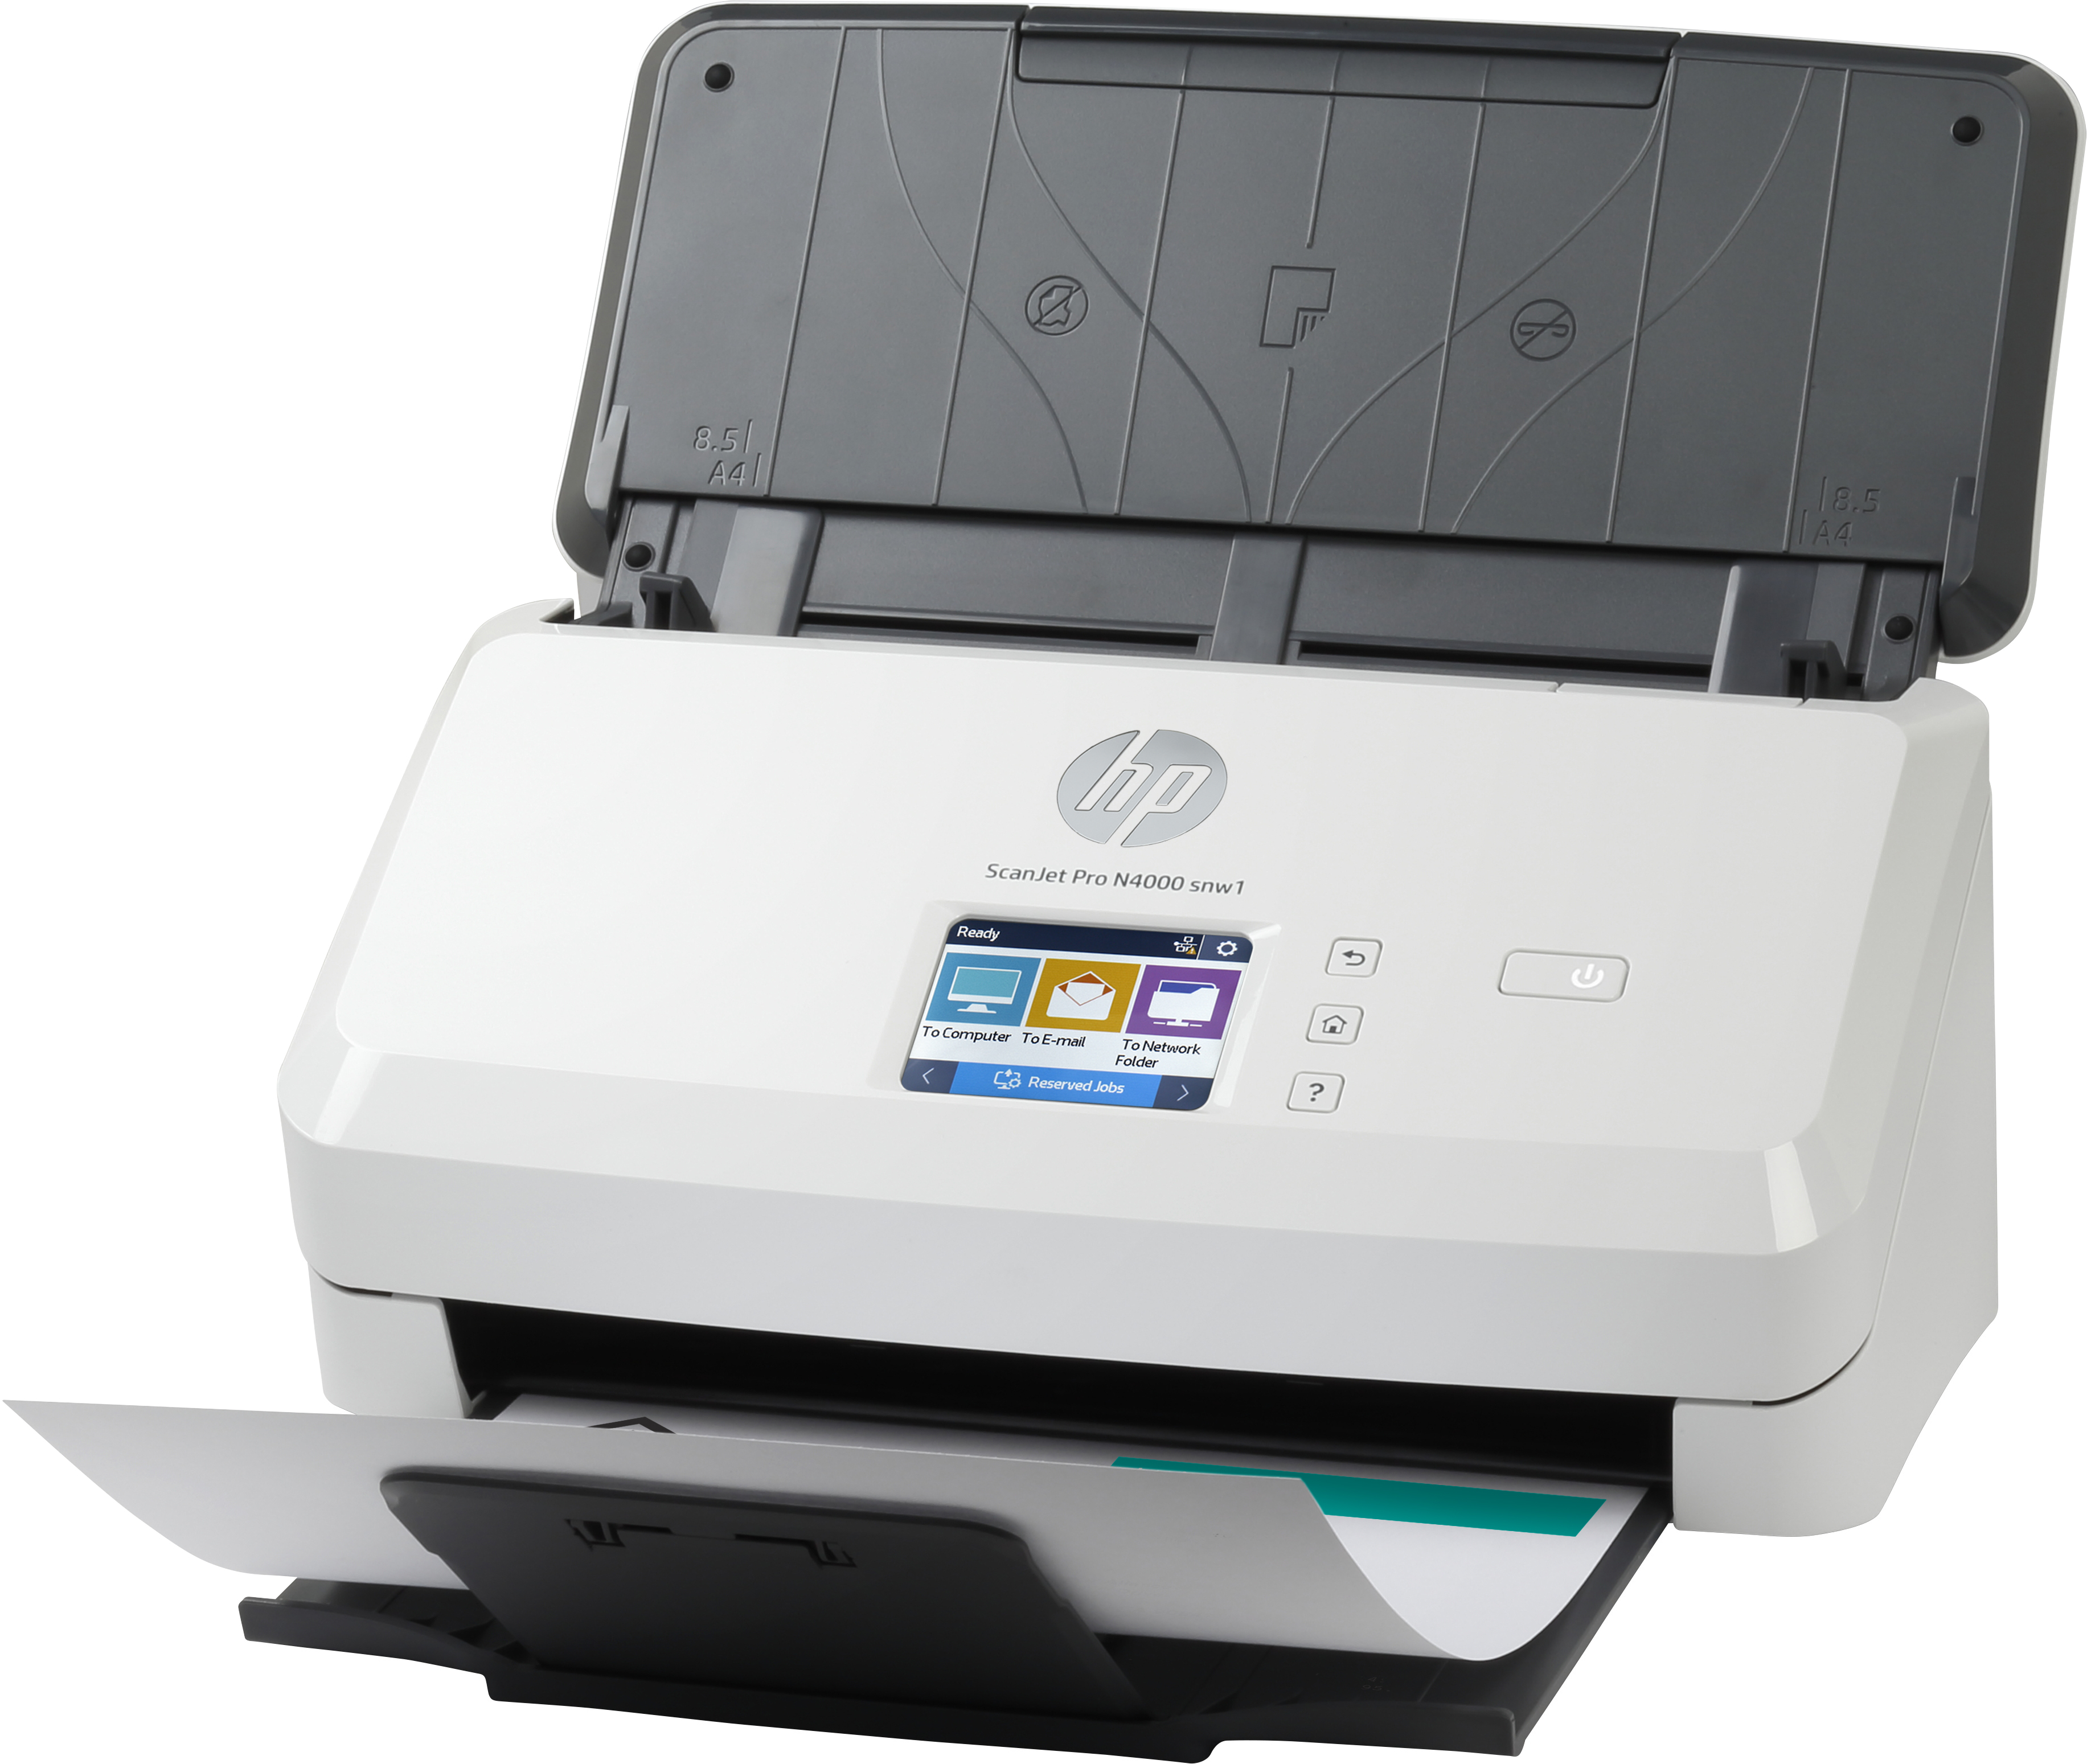 HP 600 , 600 Pro Scanner dpi N4000 x Scanjet